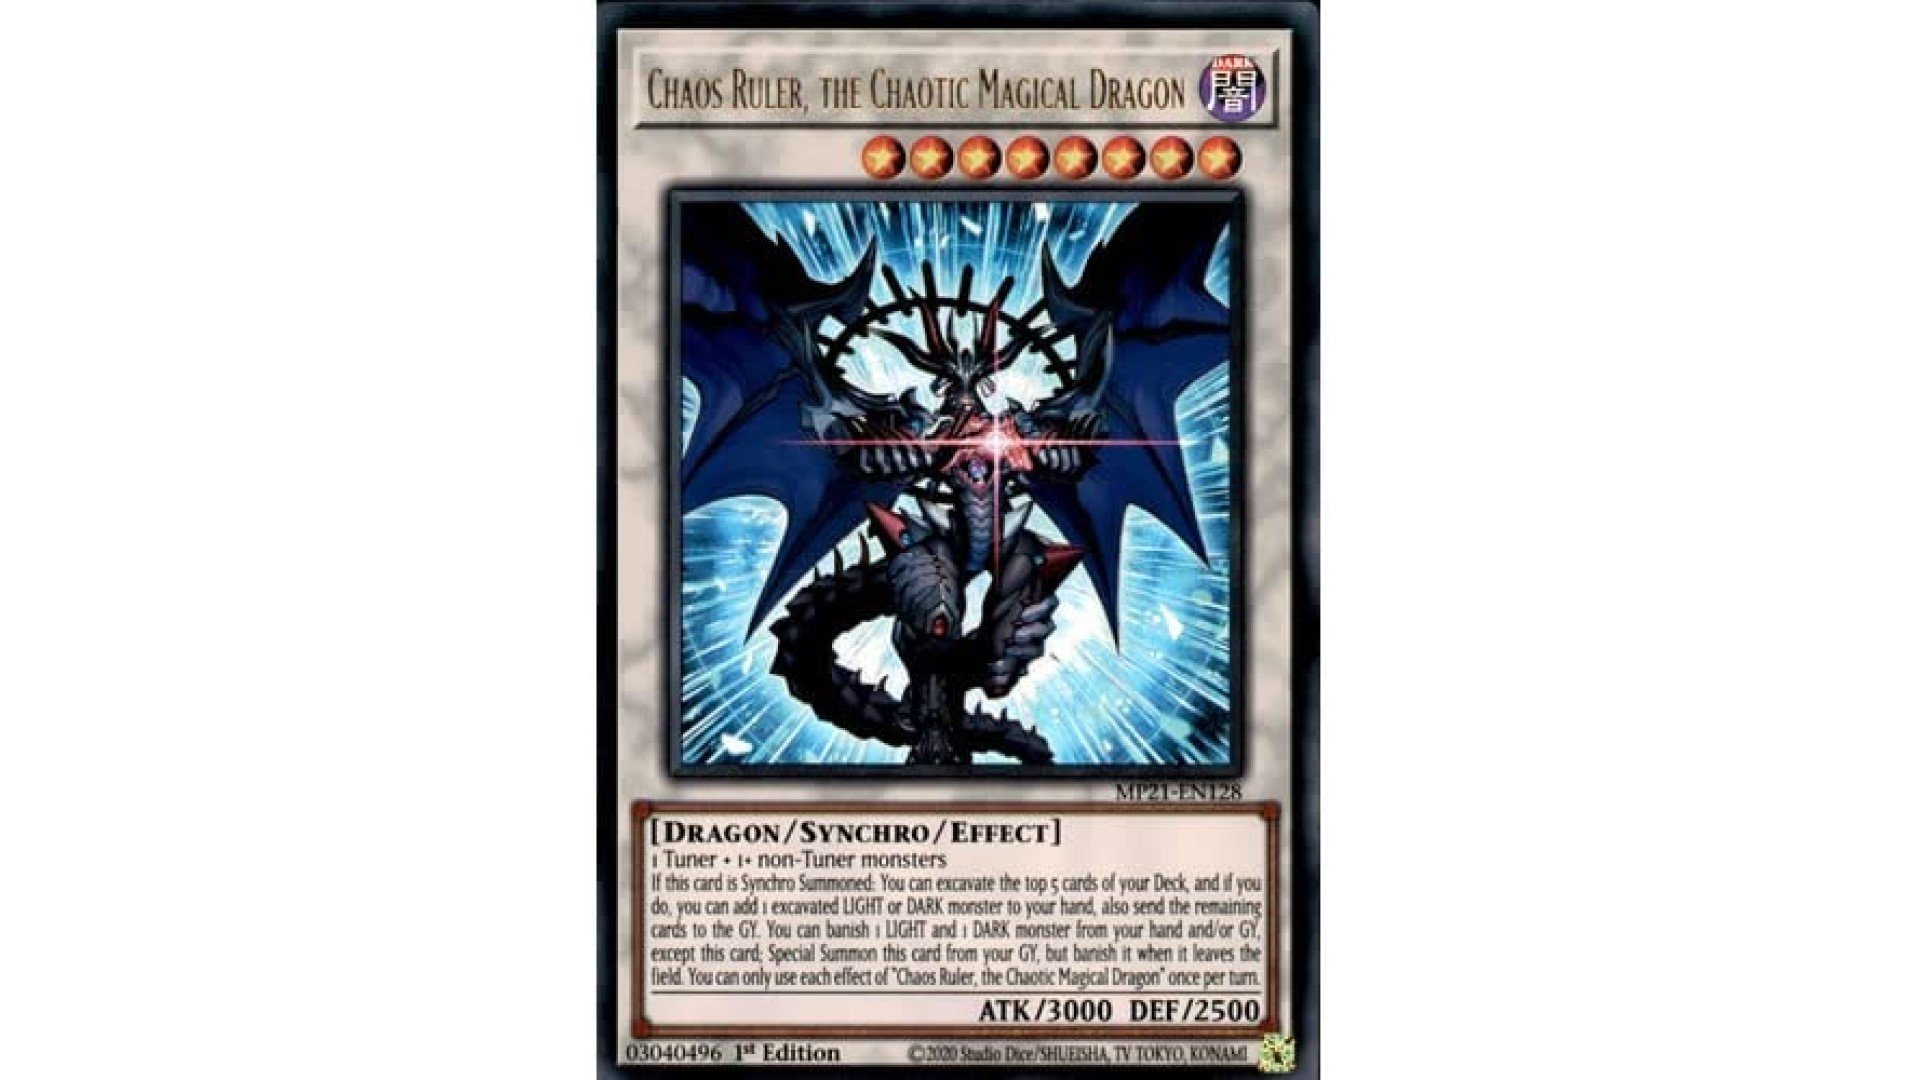 Yu Gi Oh Master Duel meta decks - the yugioh card choas ruler the chaotic magical dragon